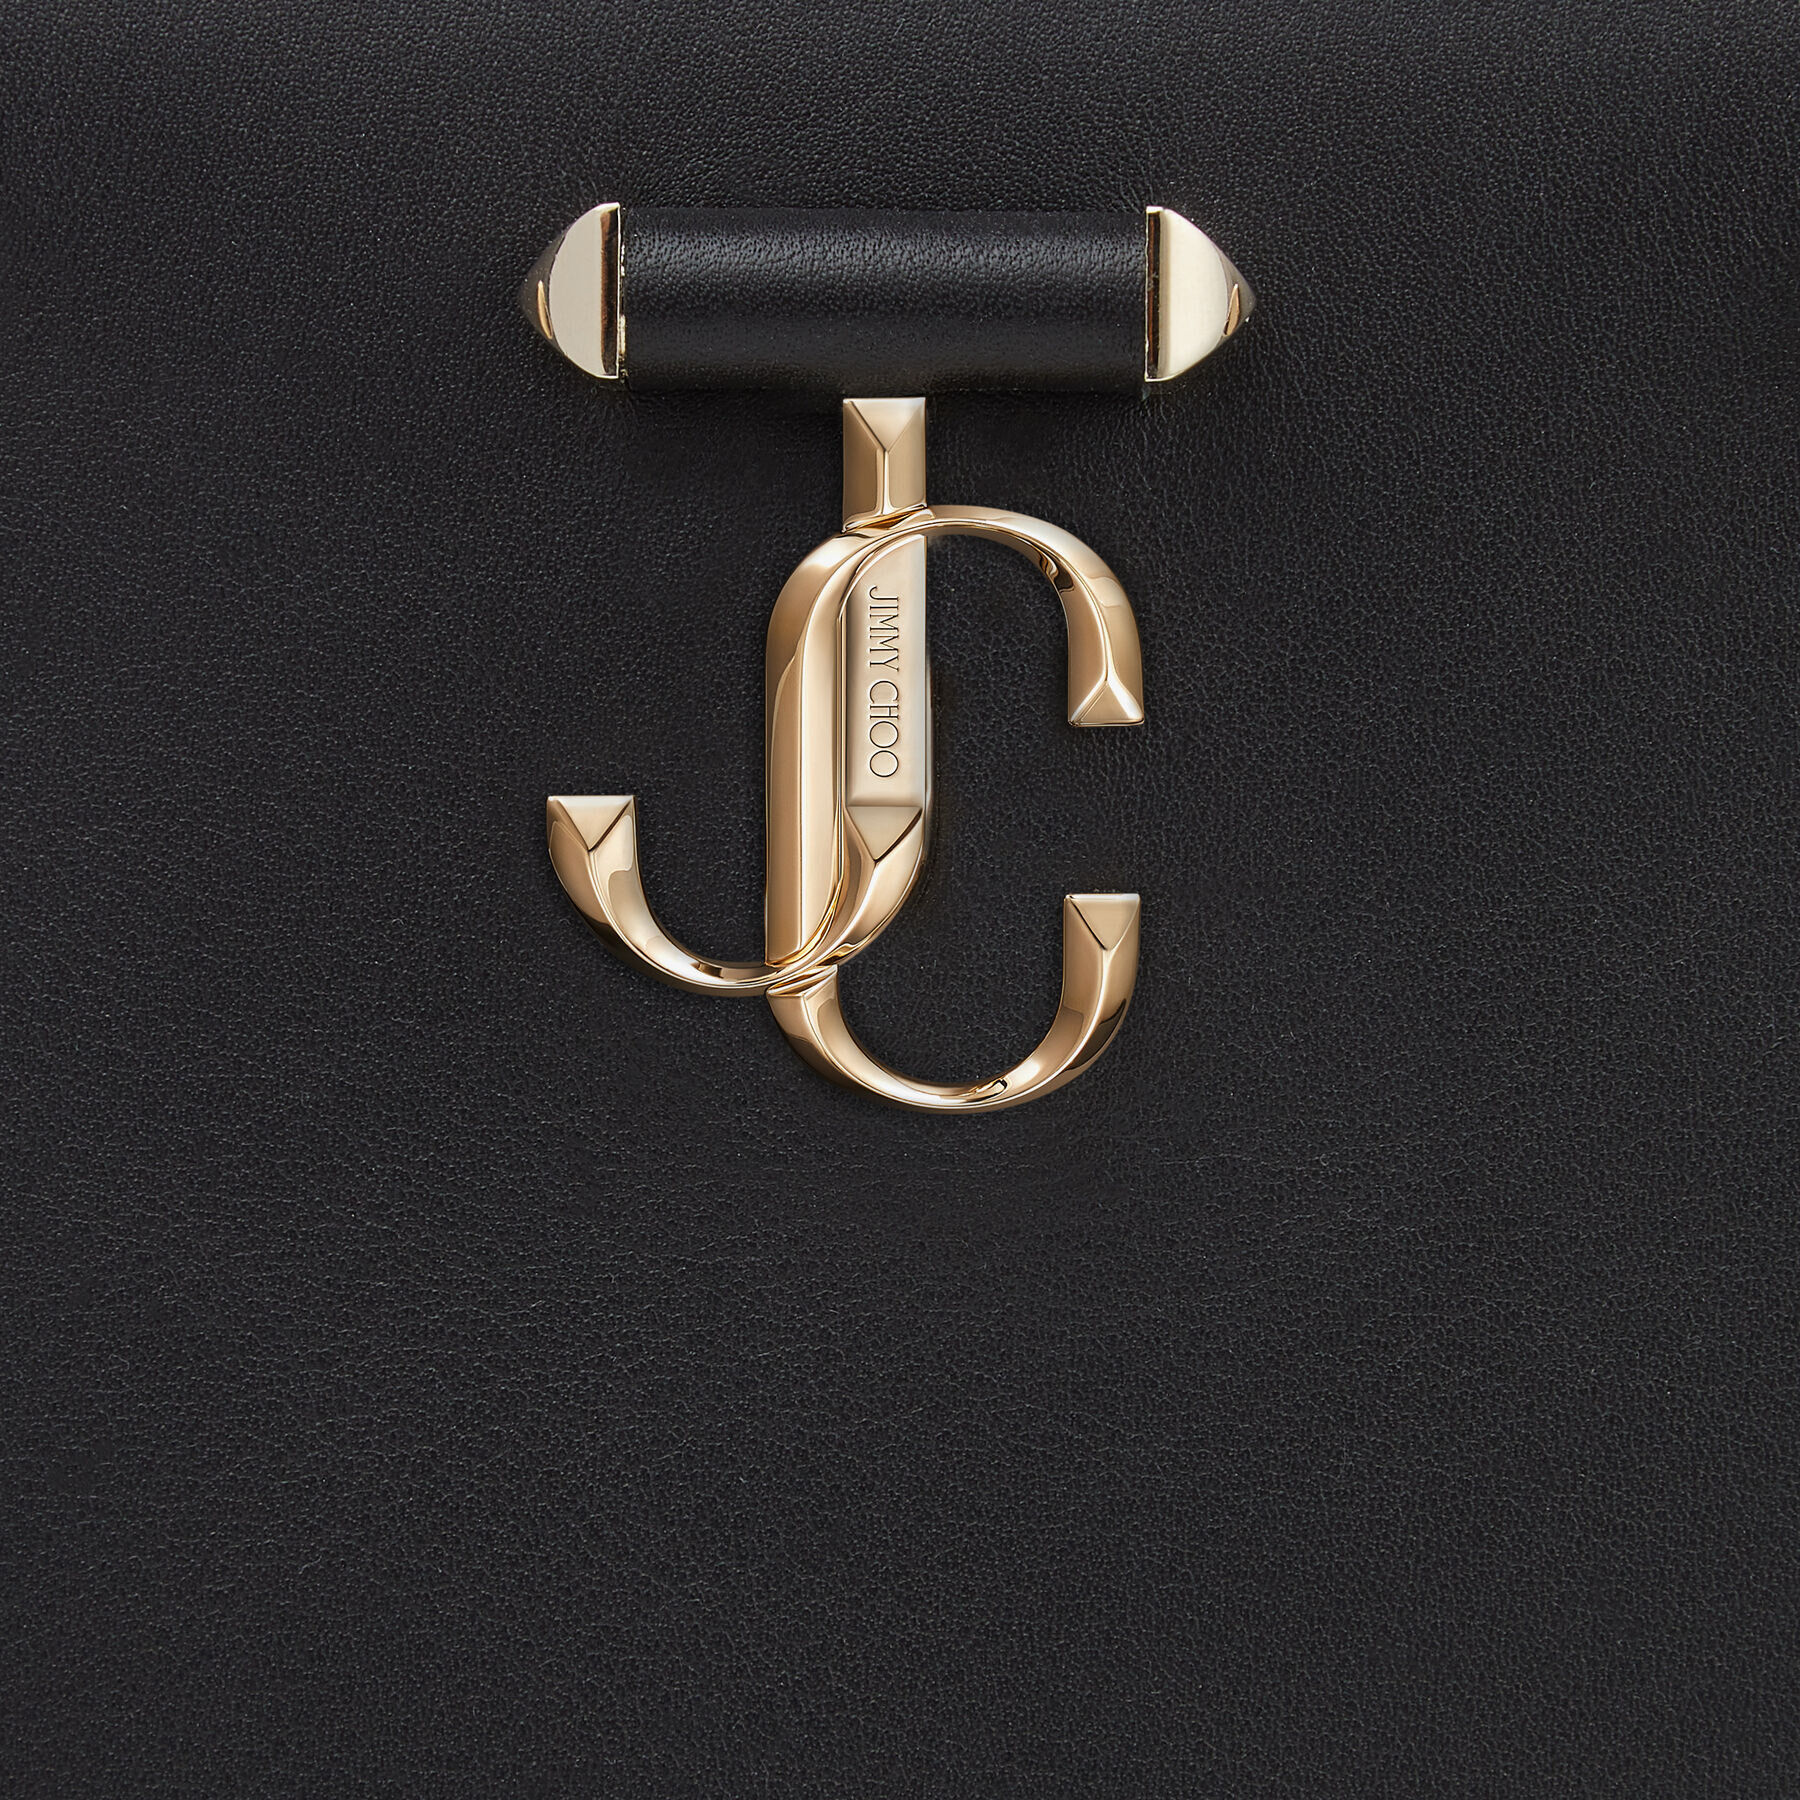 Black Fine Shiny Calf Leather Tote Bag with Light Gold JC Emblem 